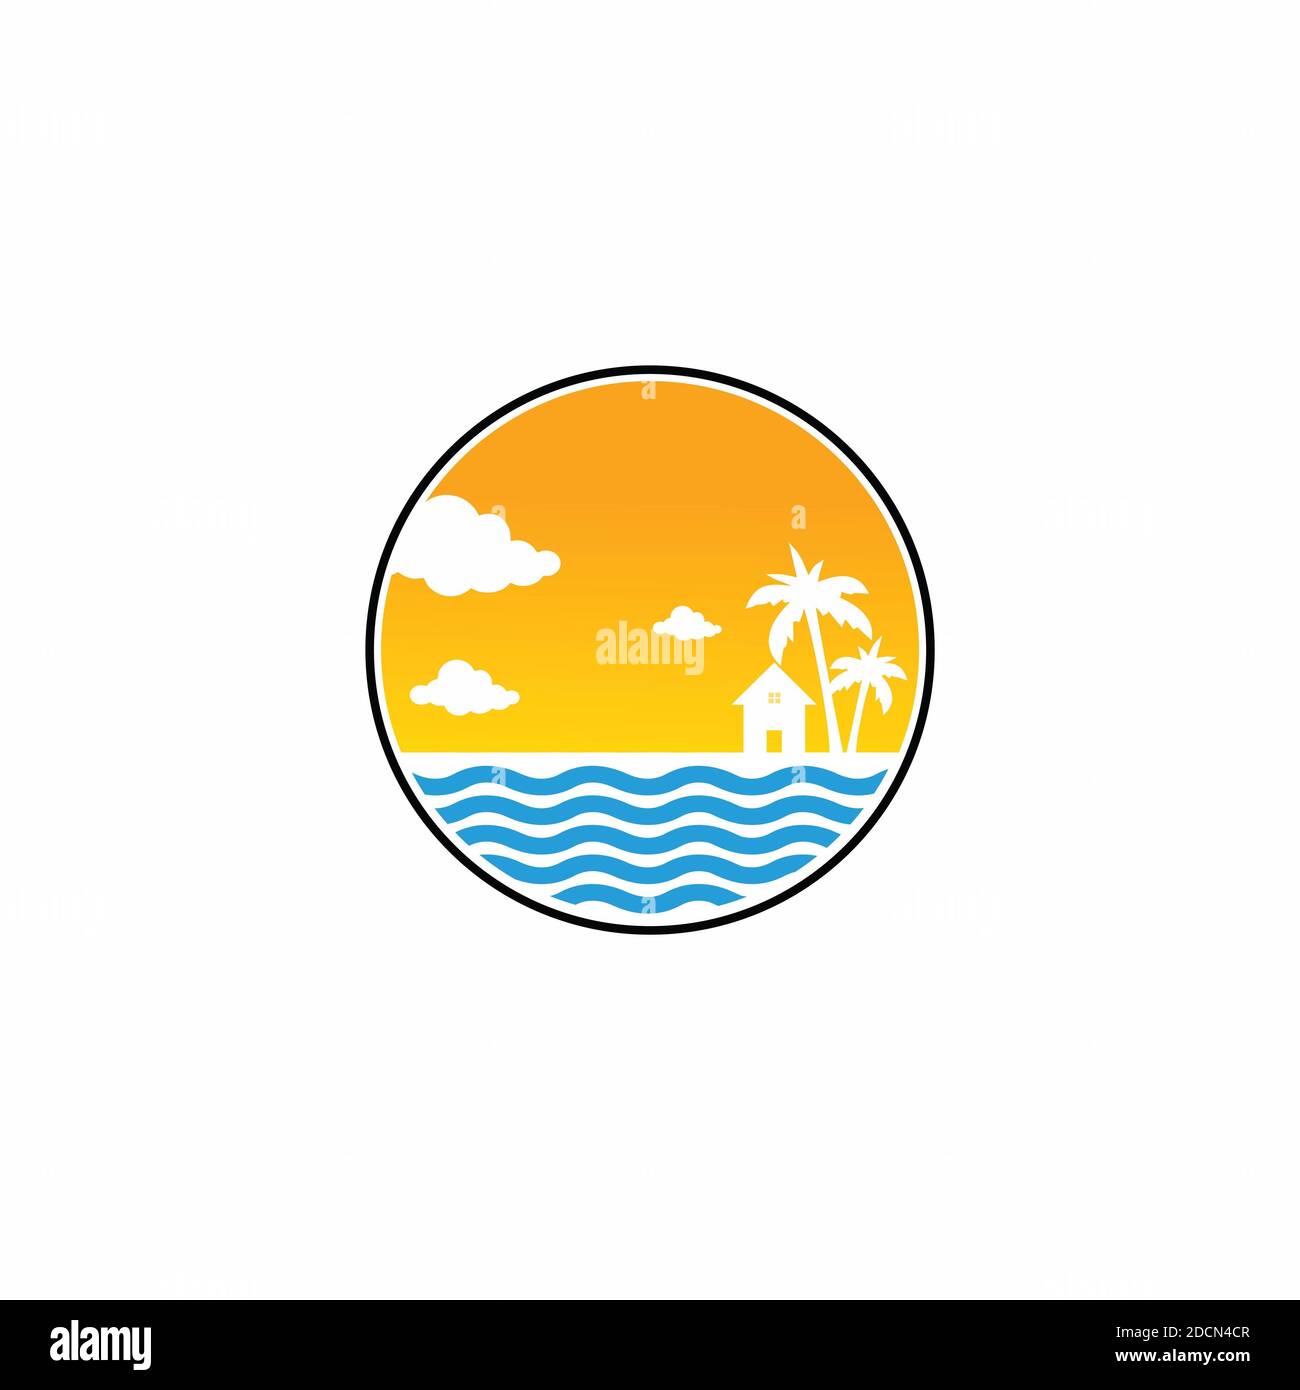 symbol icon sunset with tree palm and sea logo design inspiration. Stock Photo